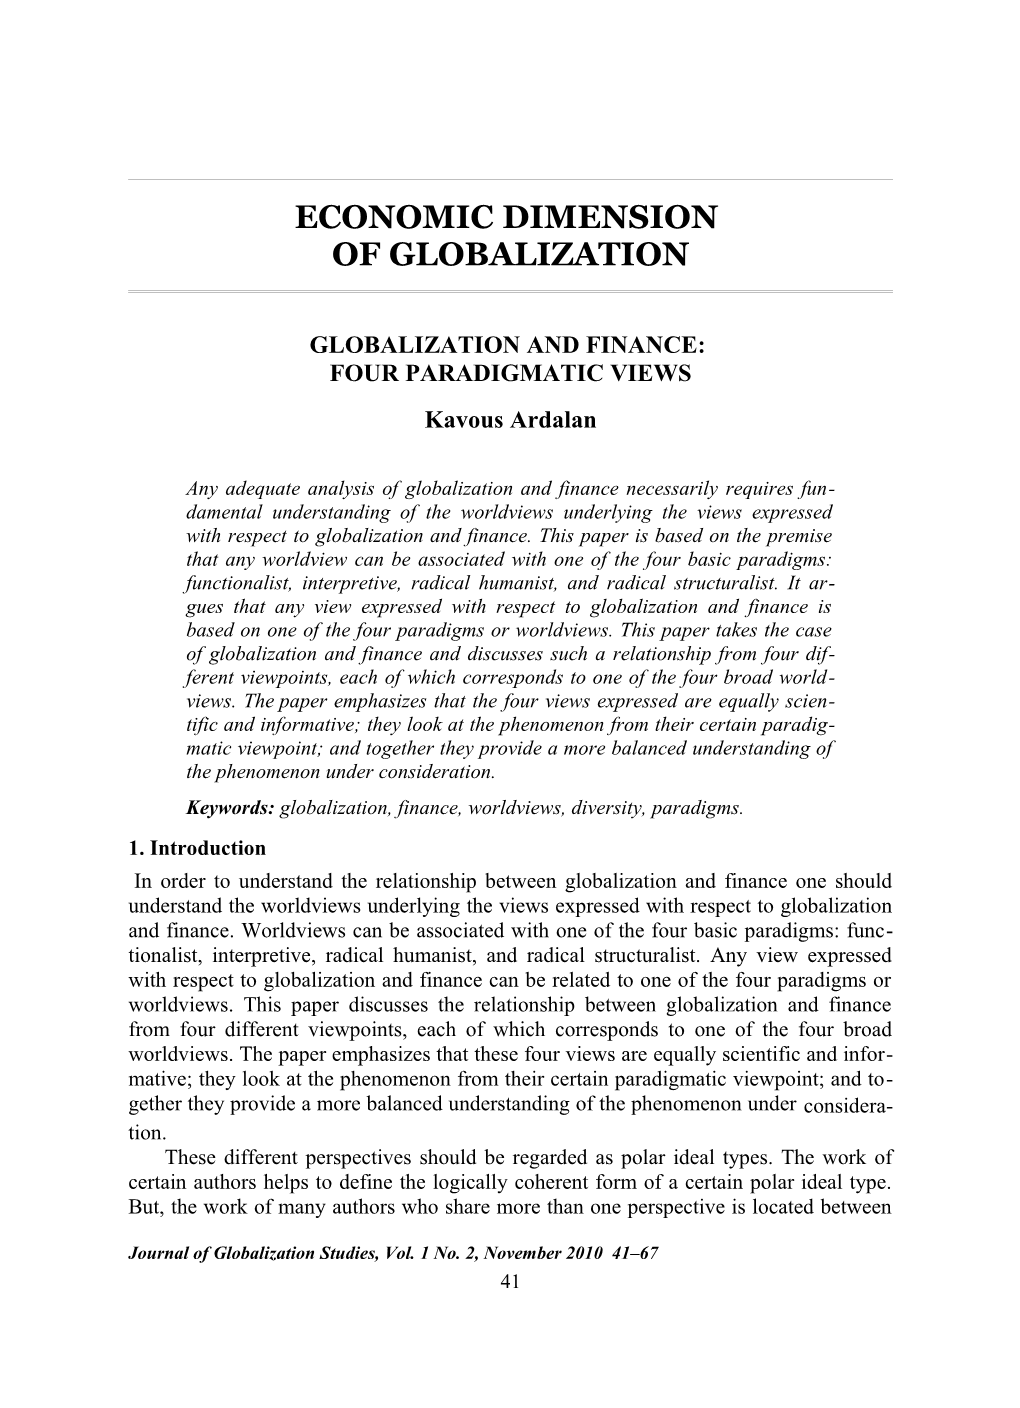 Ardalan Globalization and Finance: Four Paradigmatic Views